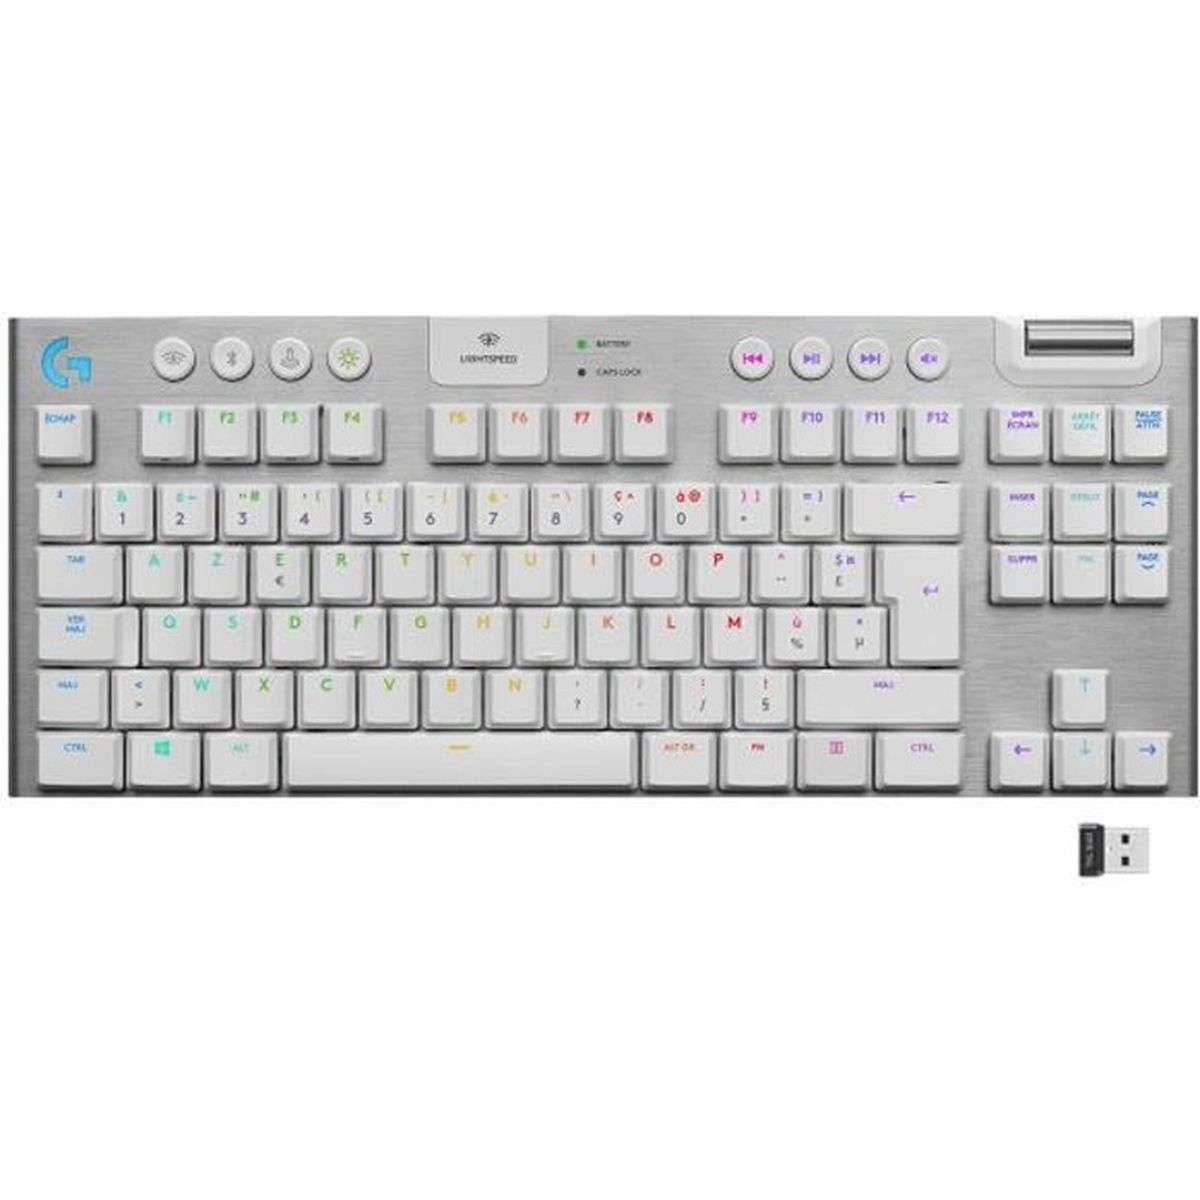 G Tastatur 920-009662, LOGITECH Computer